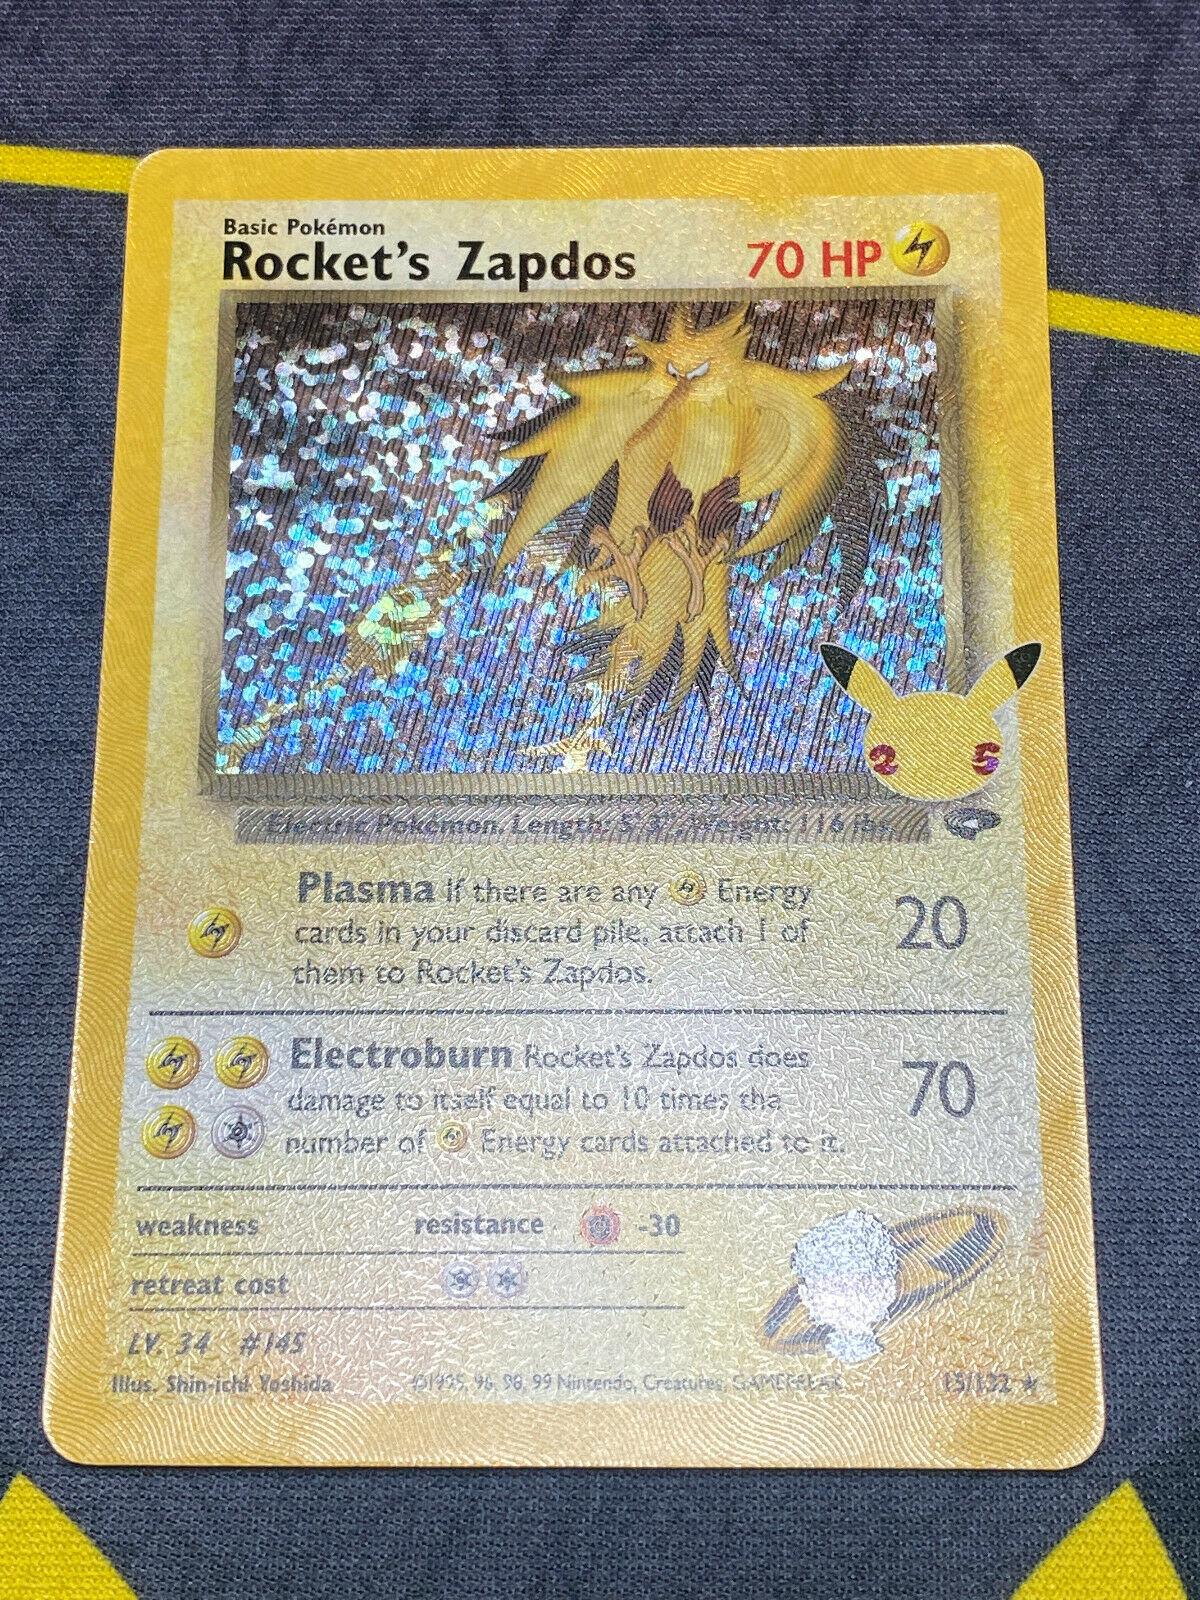 Pokémon Celebrations 018/025 Zamazenta V Holo Rare NM – Cars N Cards